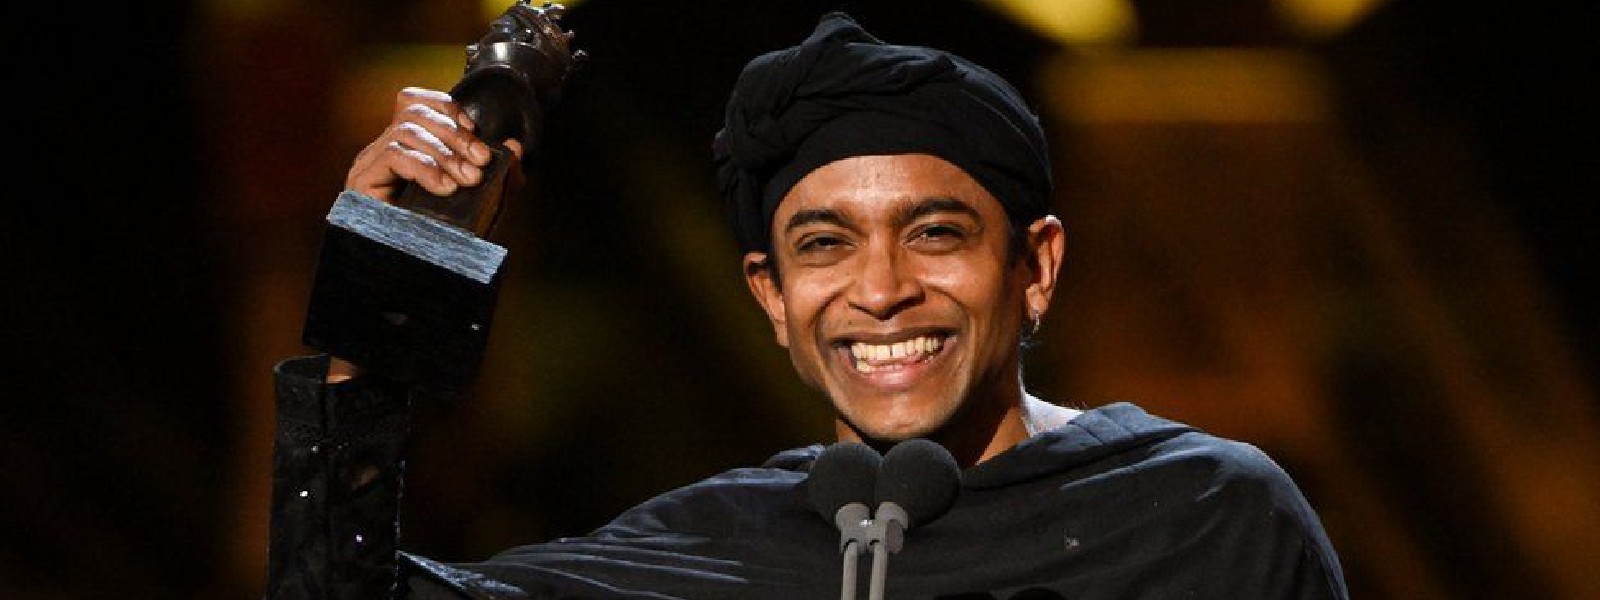 Hiran Abeysekera wins best actor at Olivier Awards